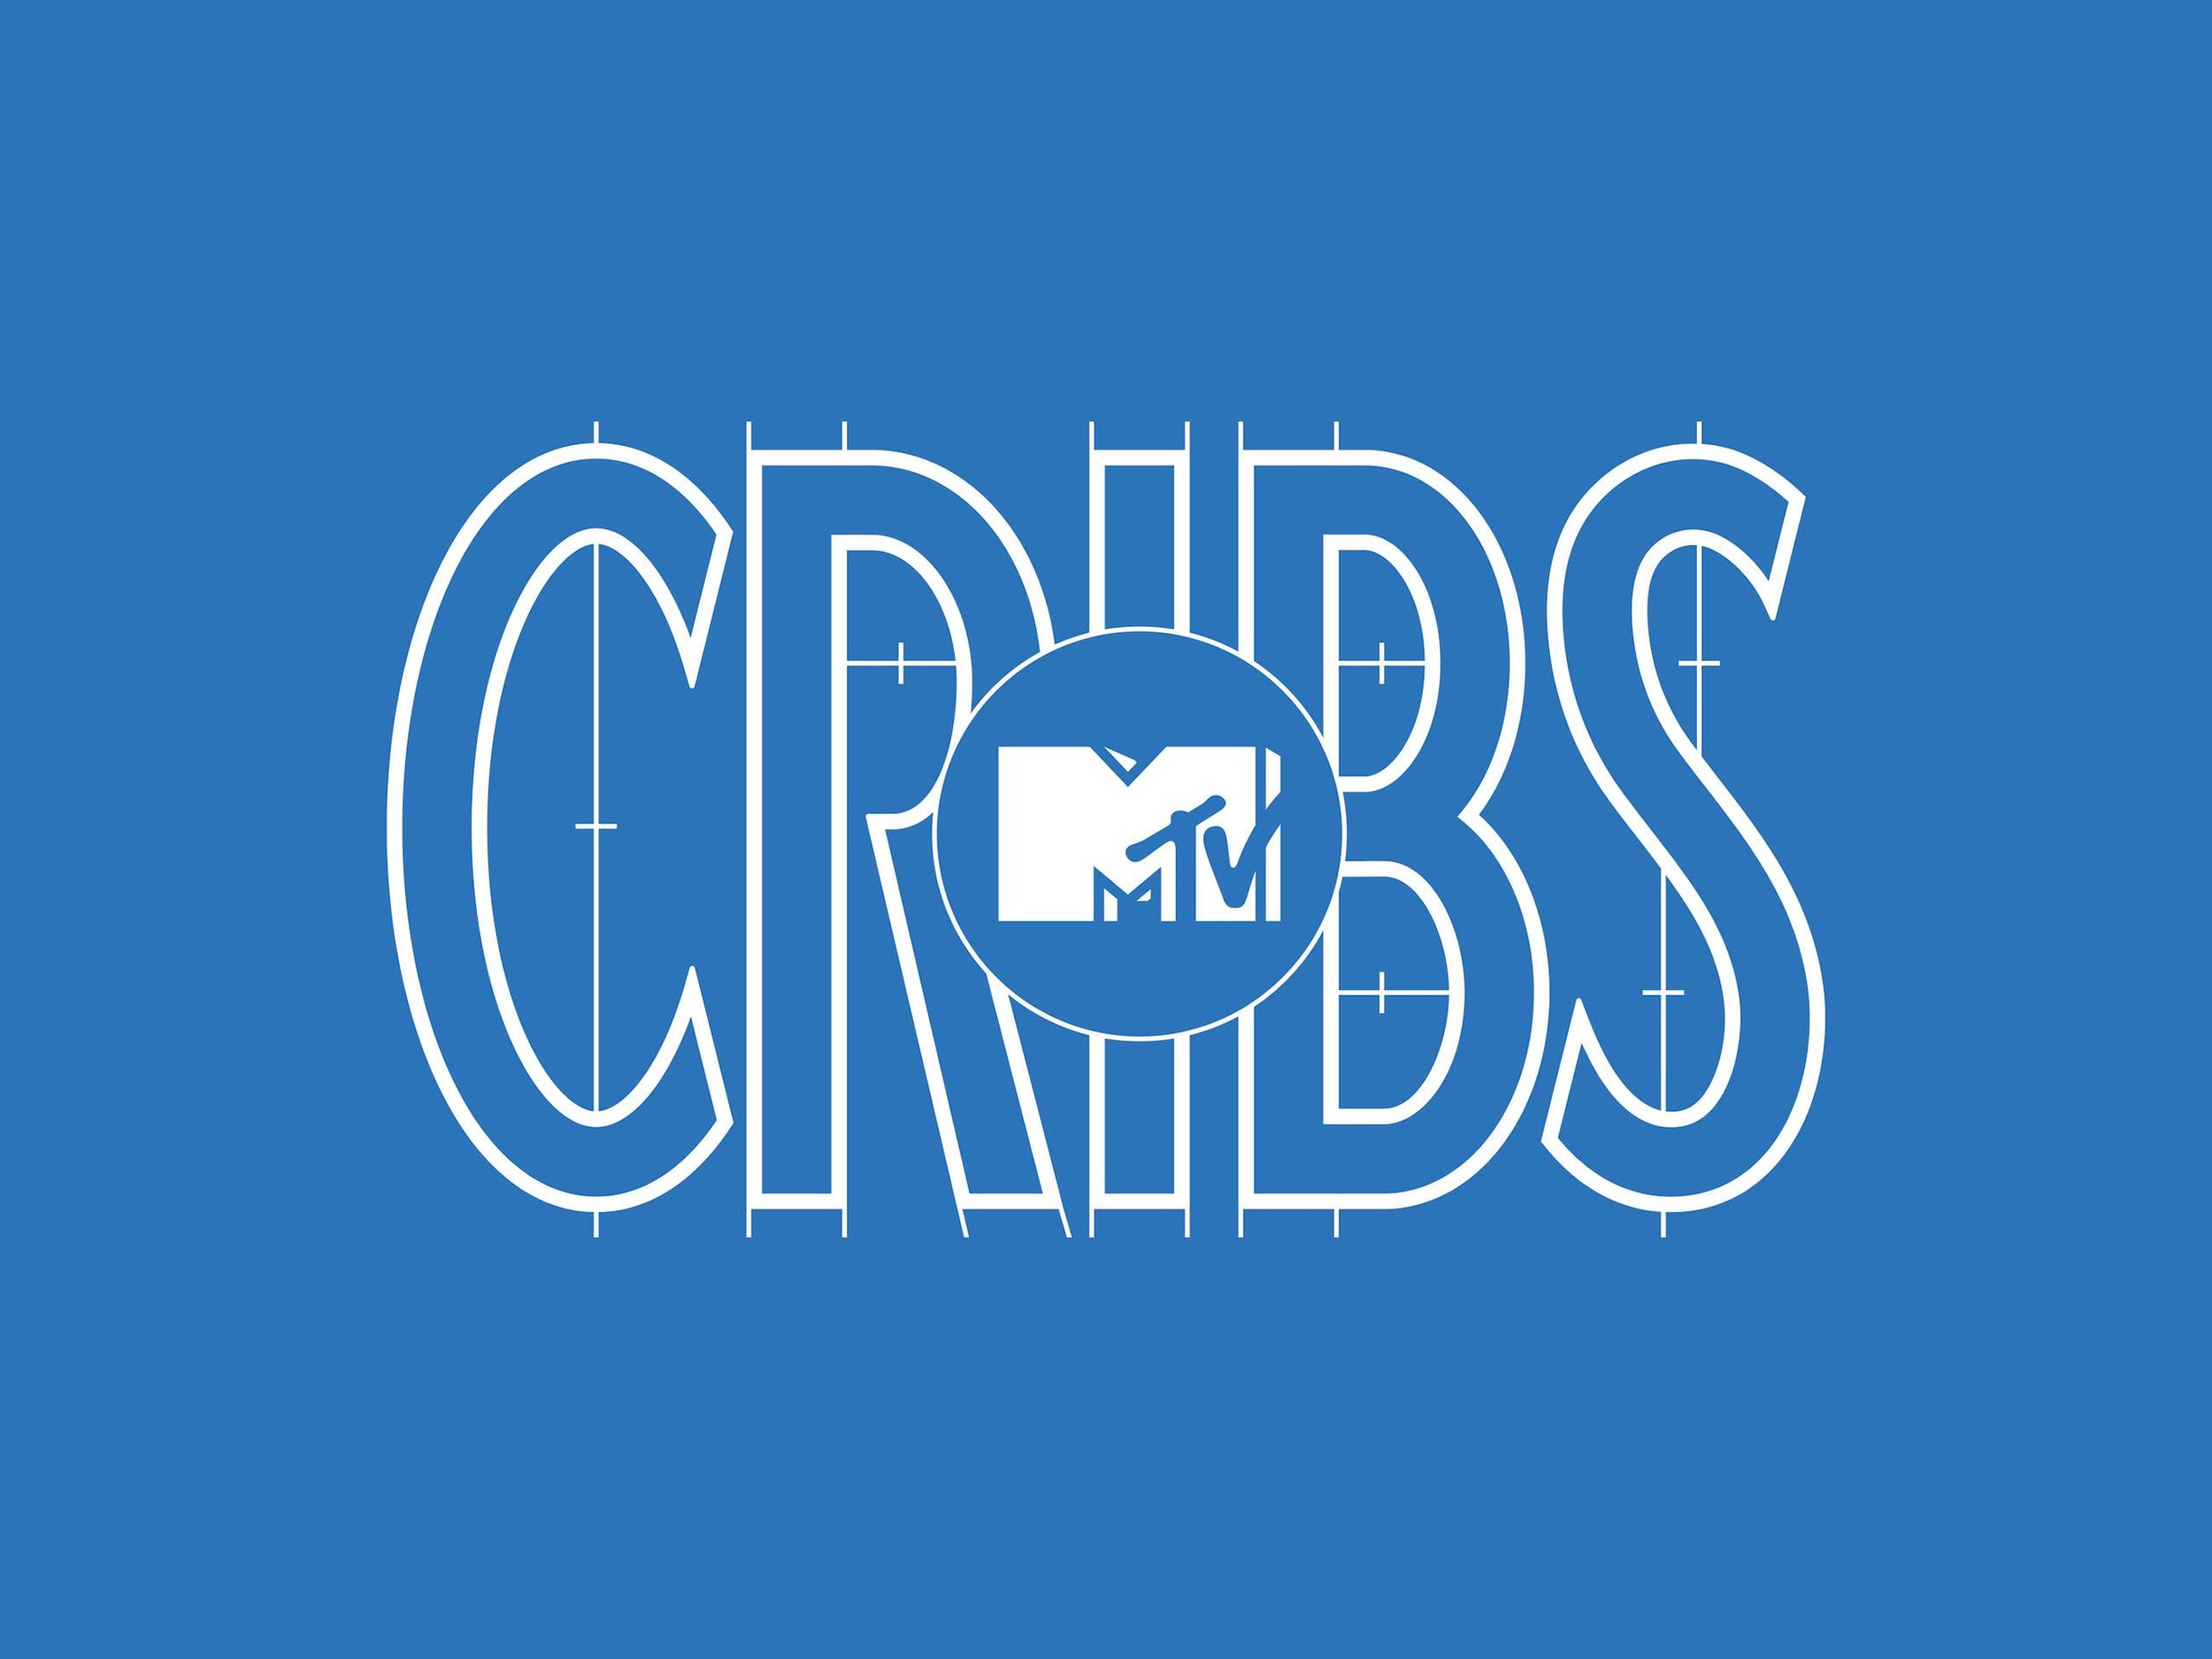 CRIBS - MTV